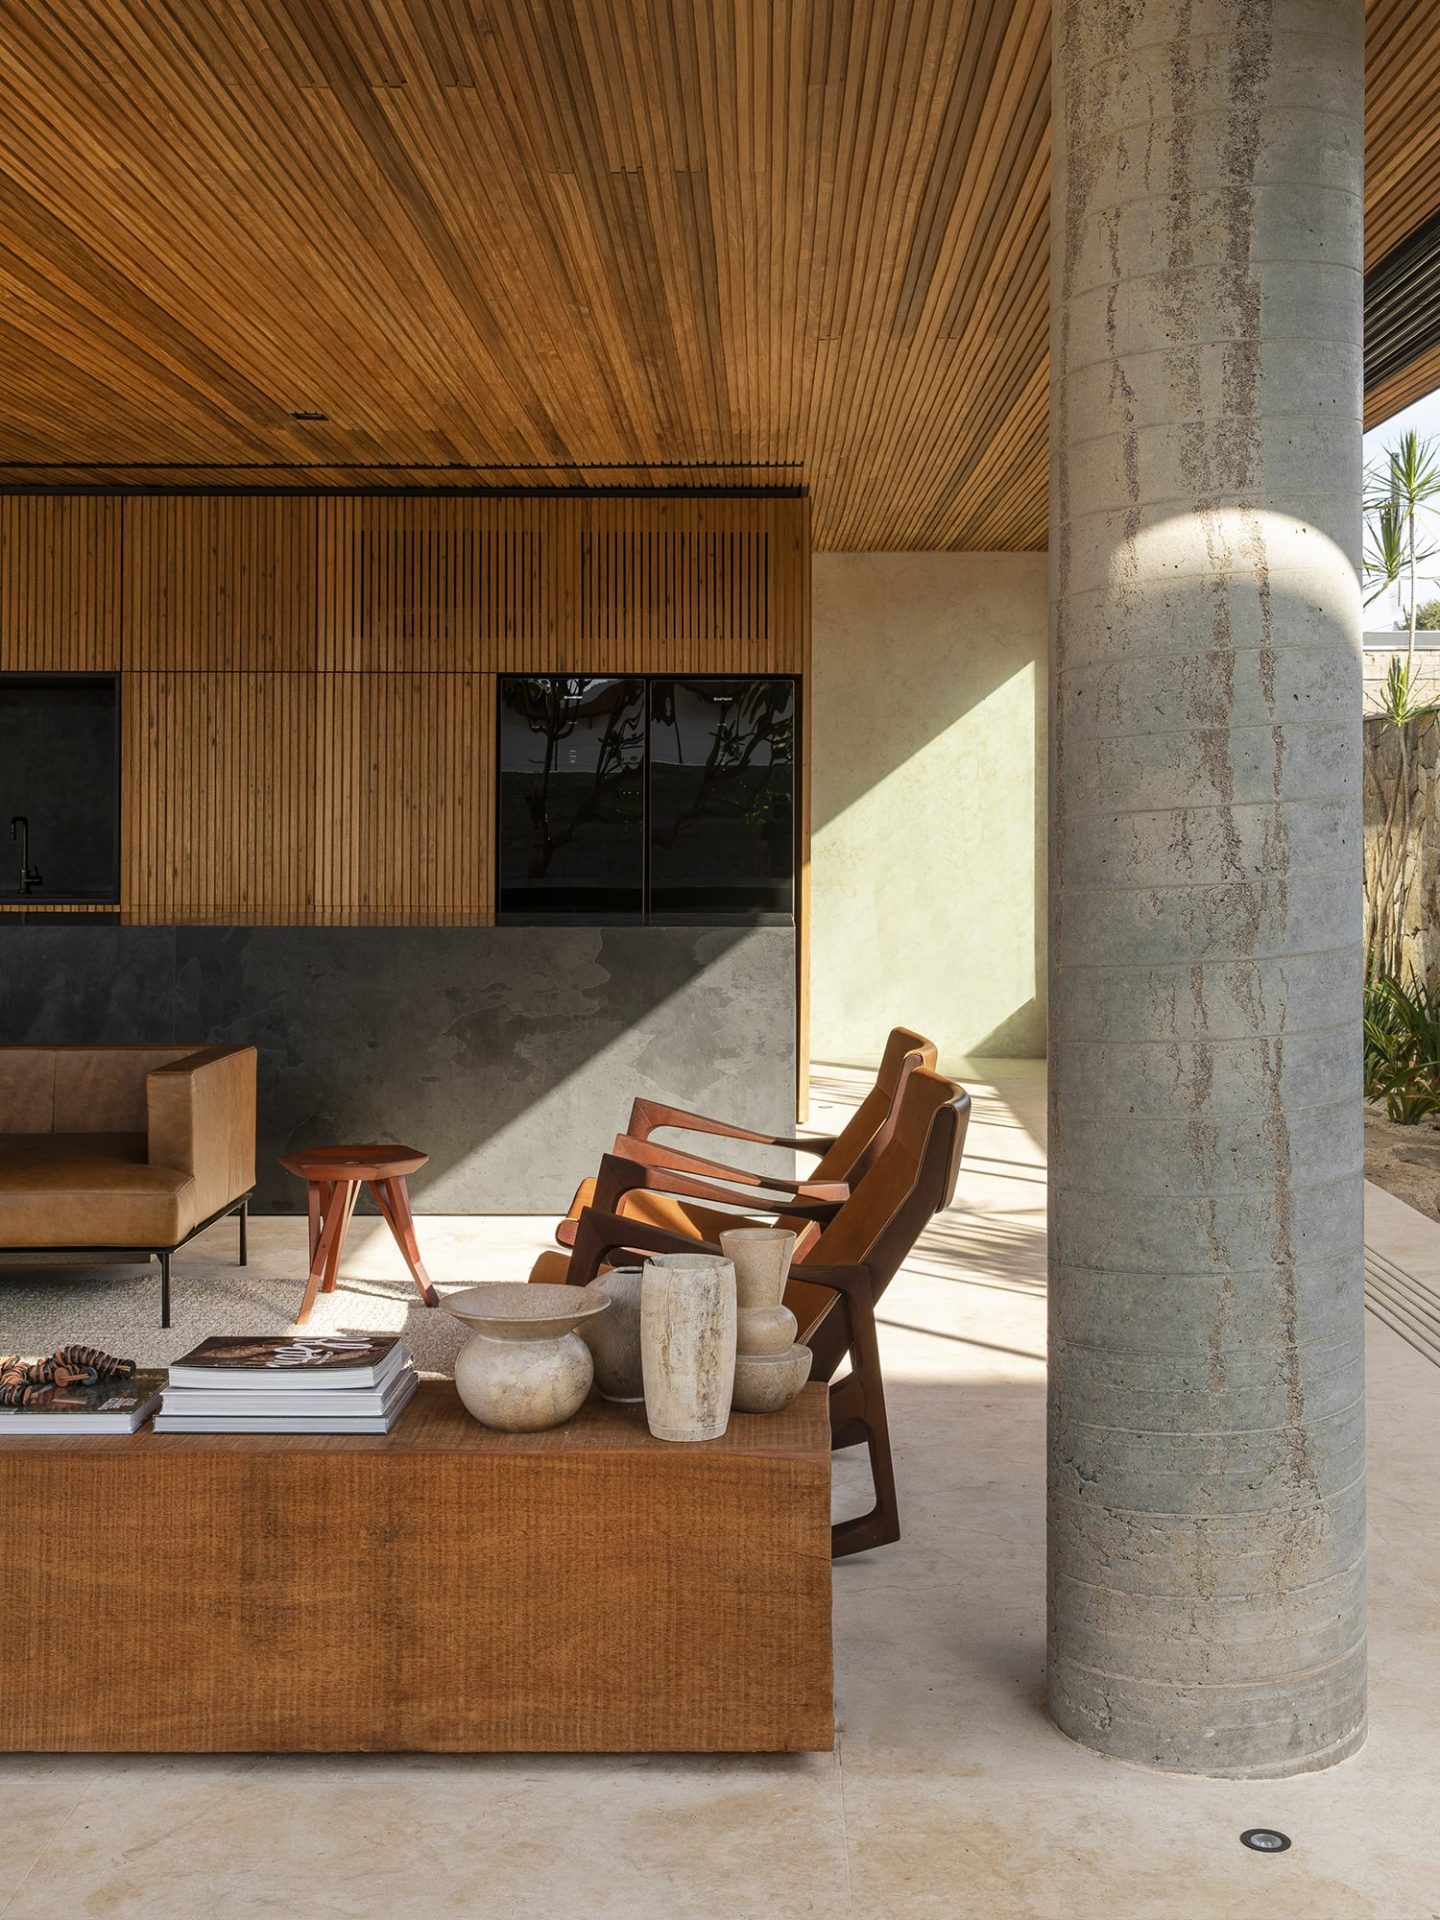 Casa Q04L63 by Brazilian firm mf+arquitetos